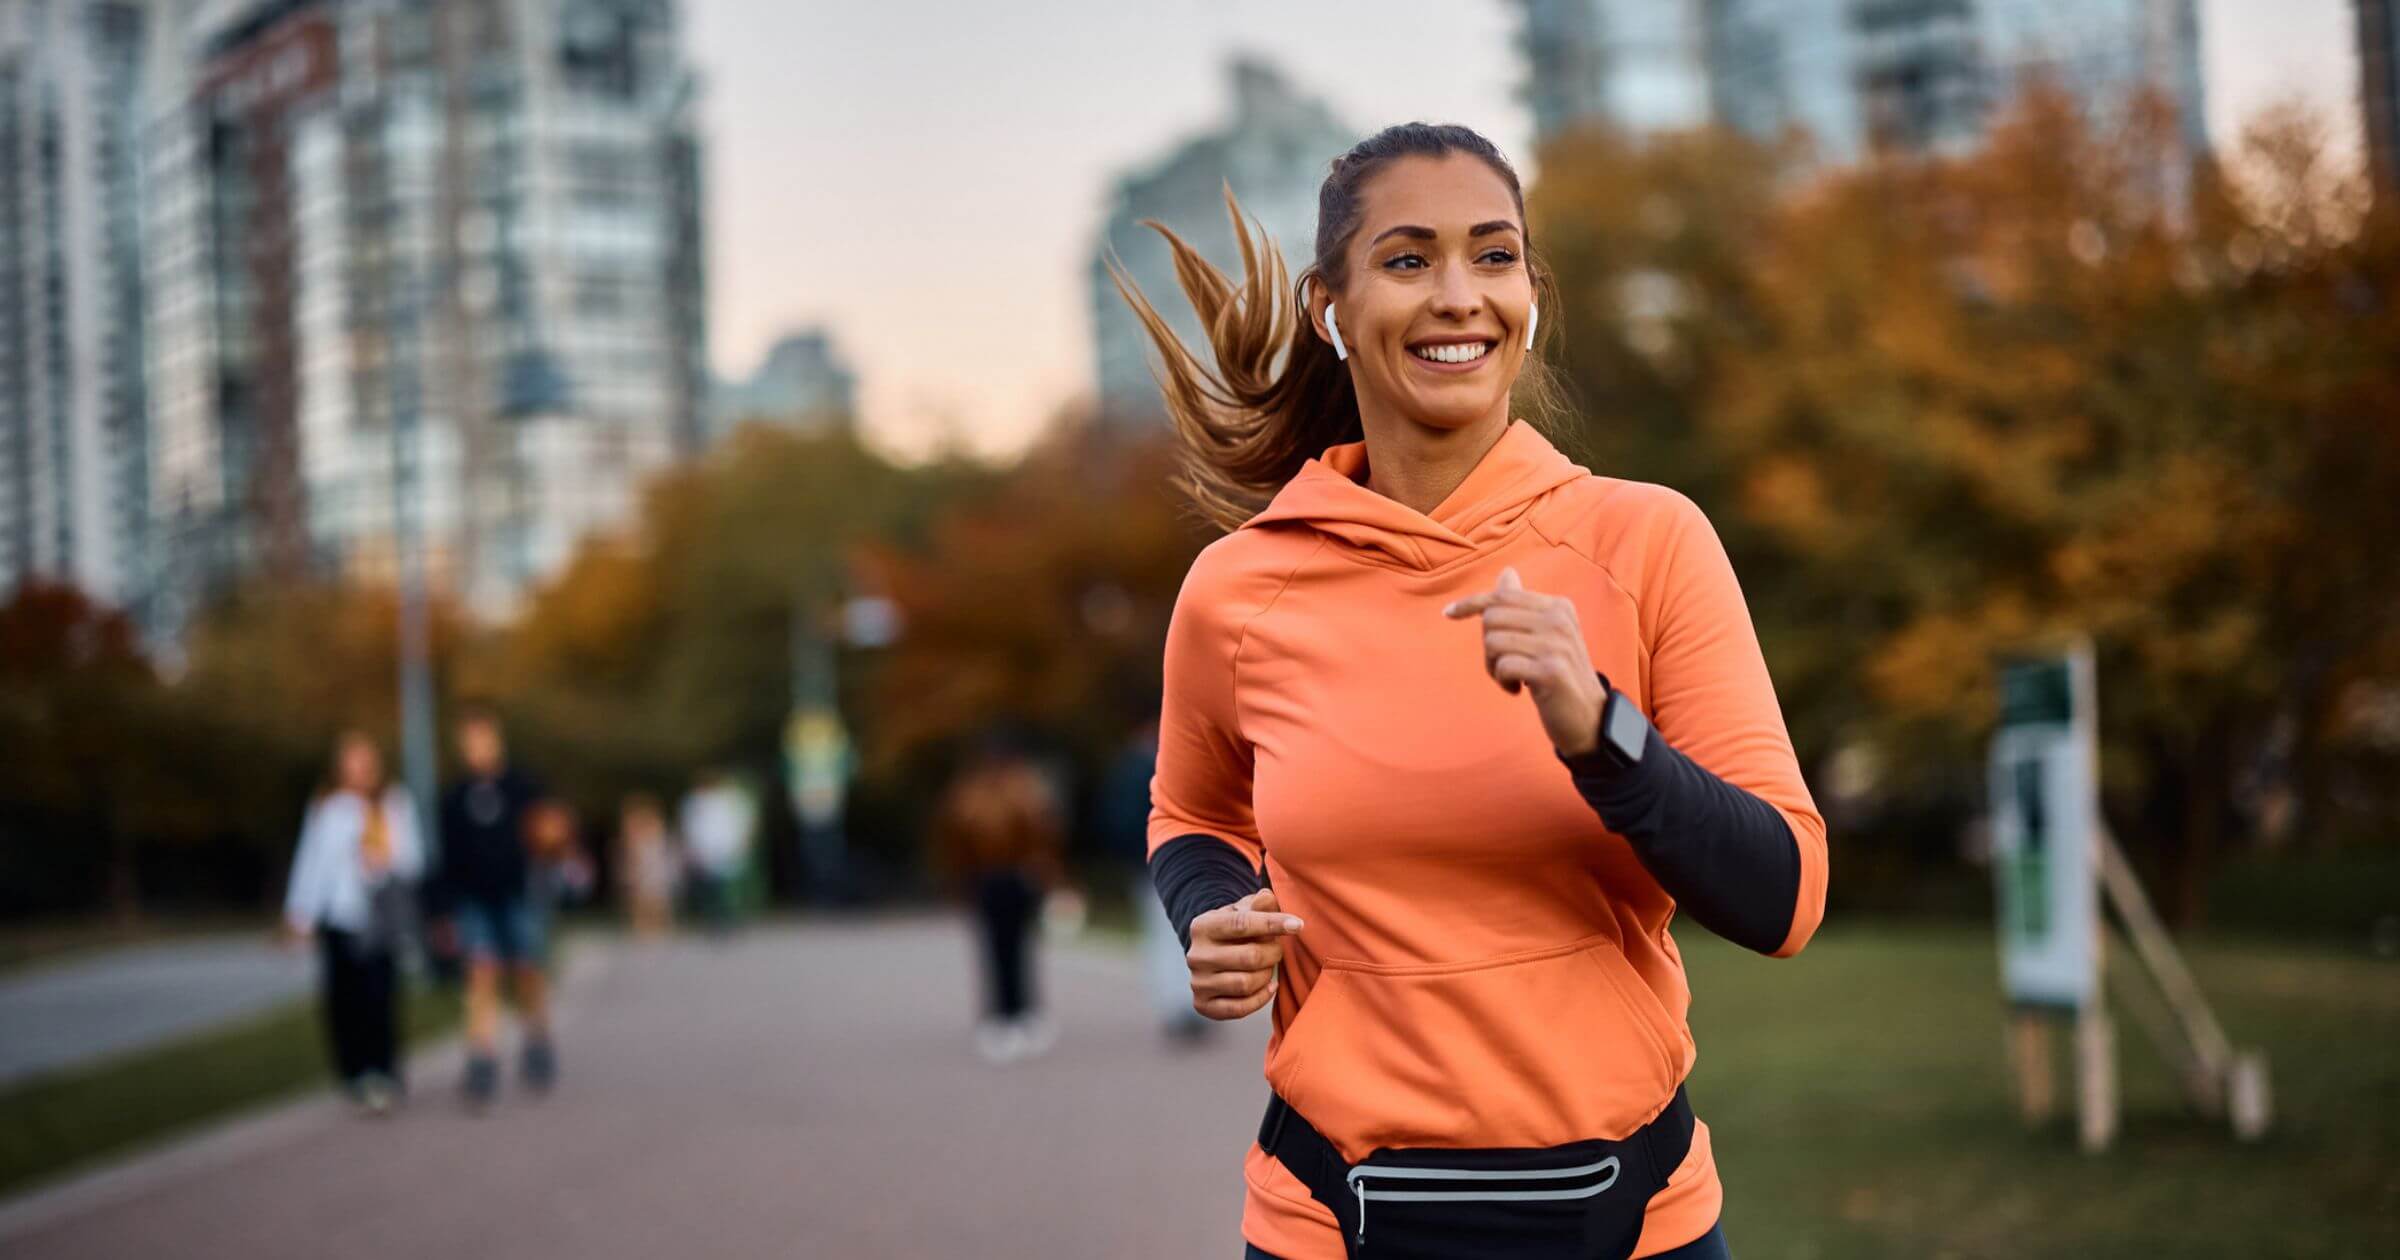 A woman smiling wearing an orange jumper as she runs through a park in a city